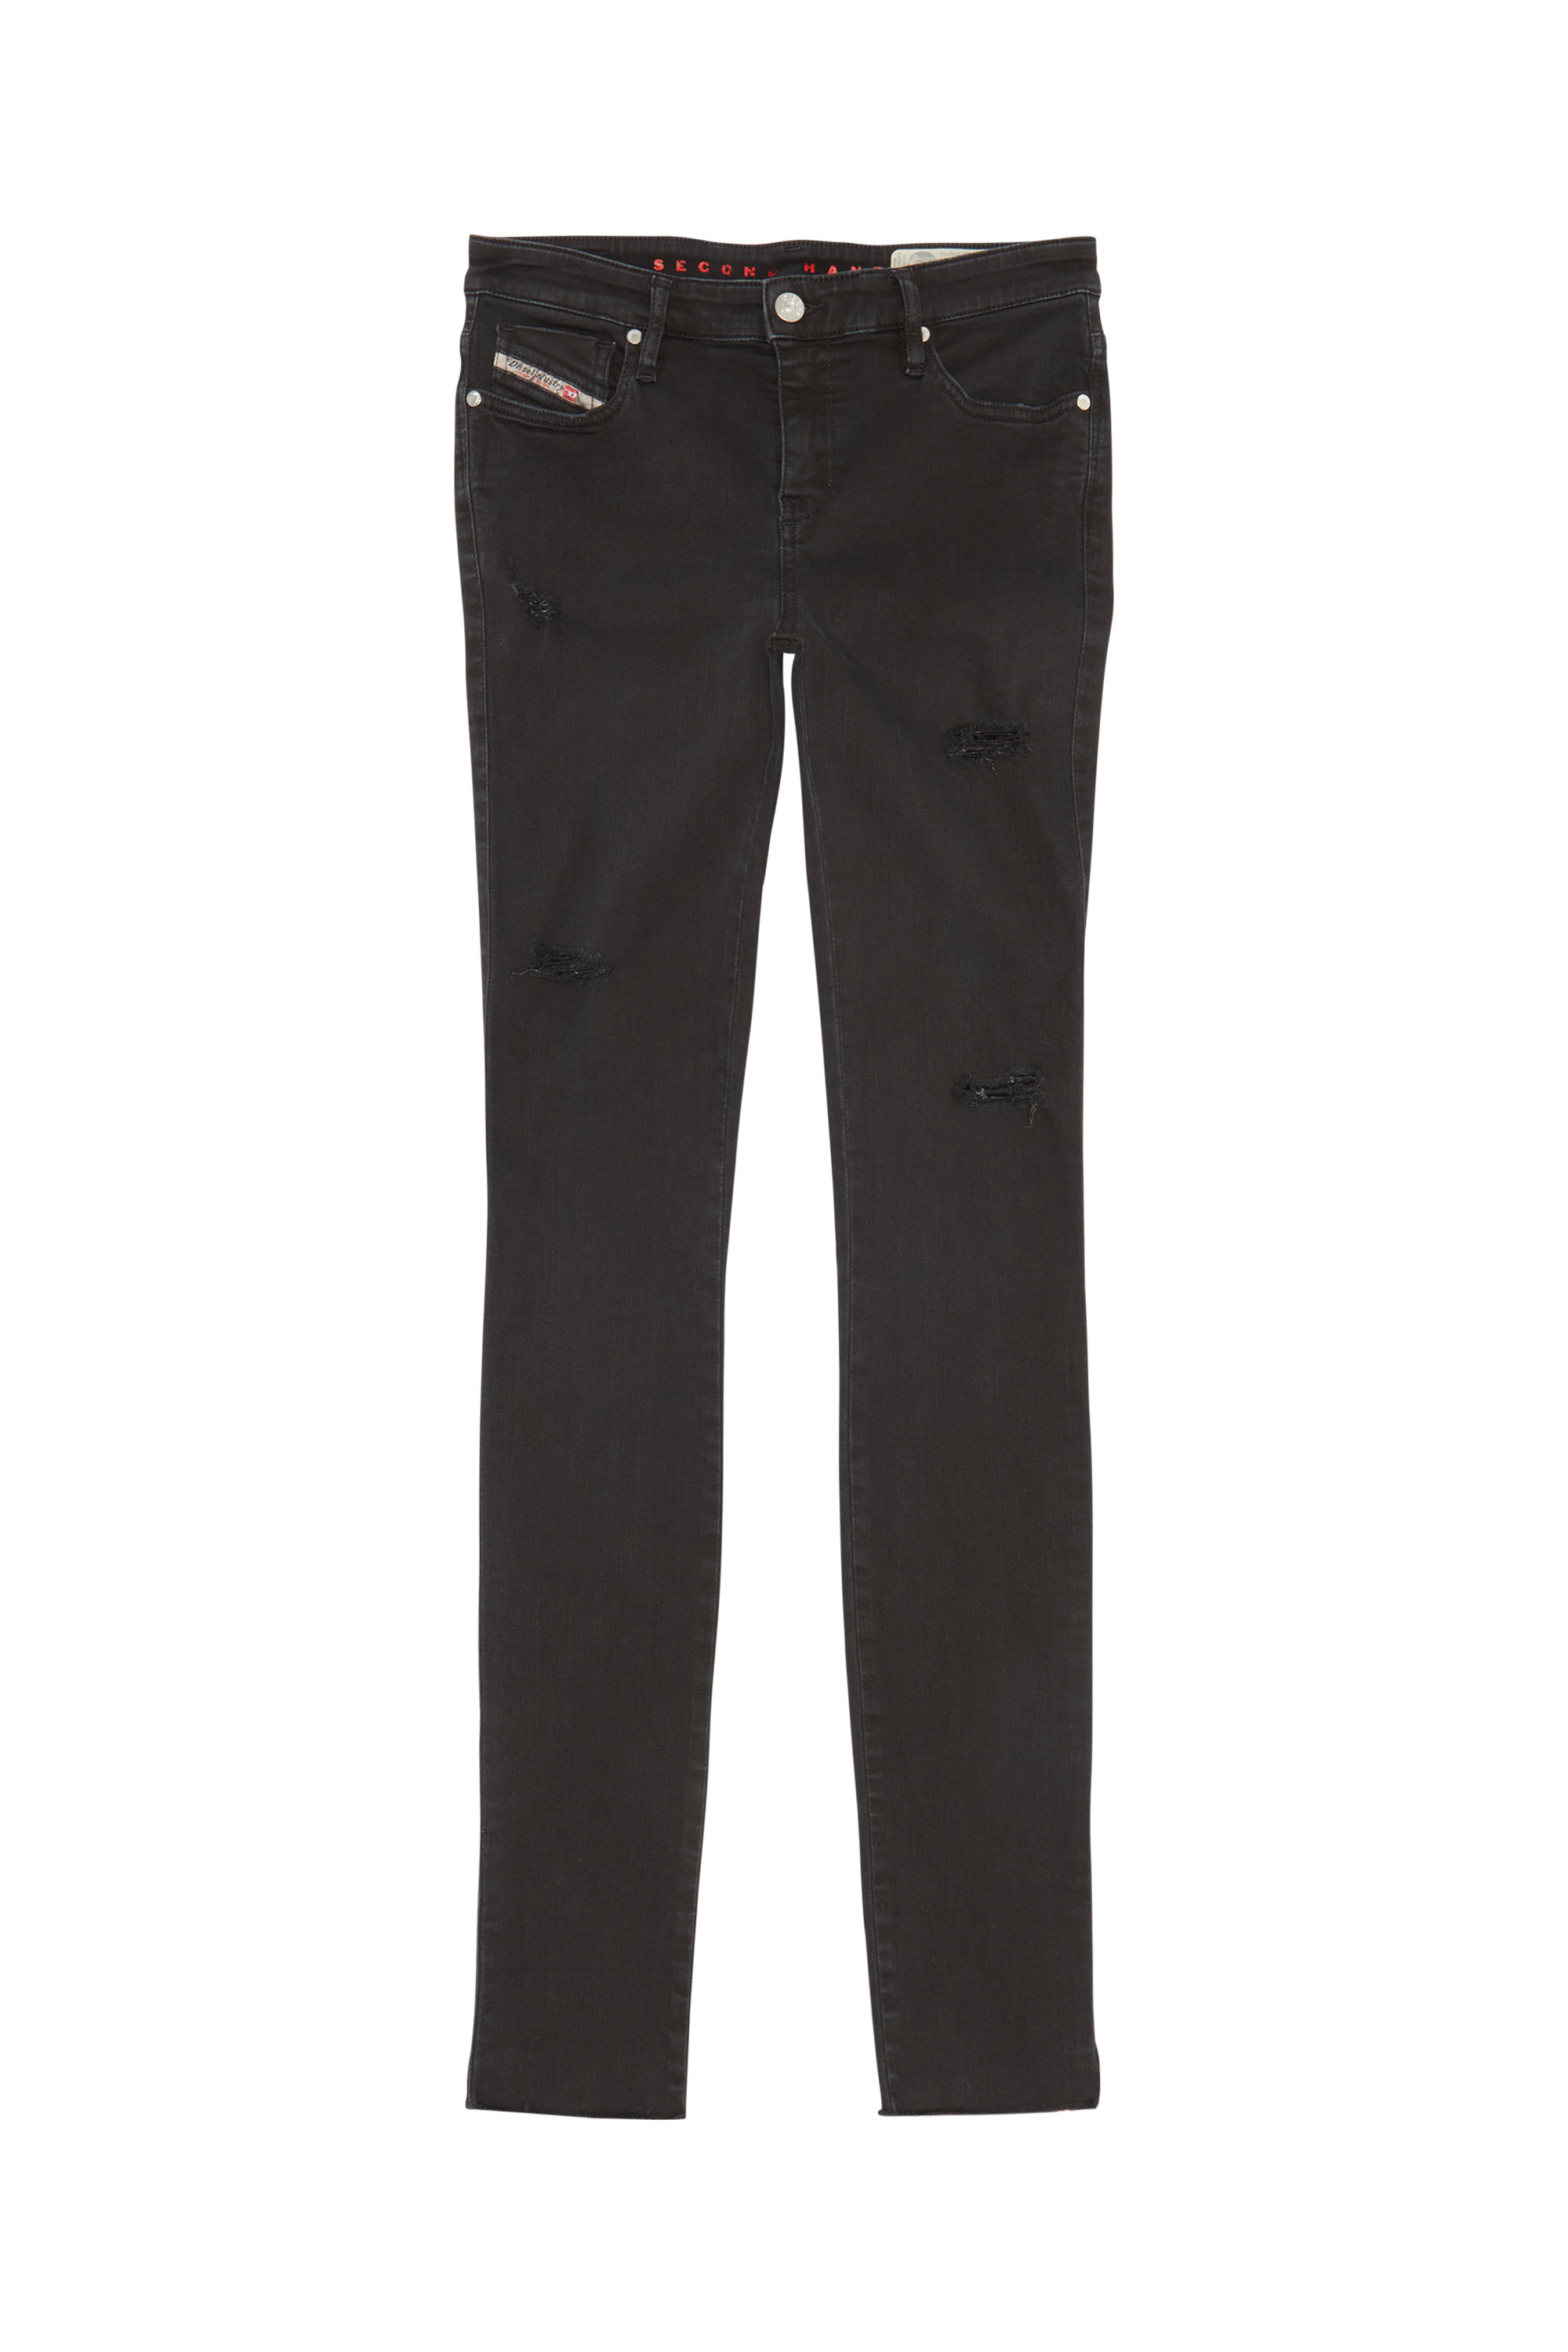 SKINZEE, Black/Dark grey - Jeans